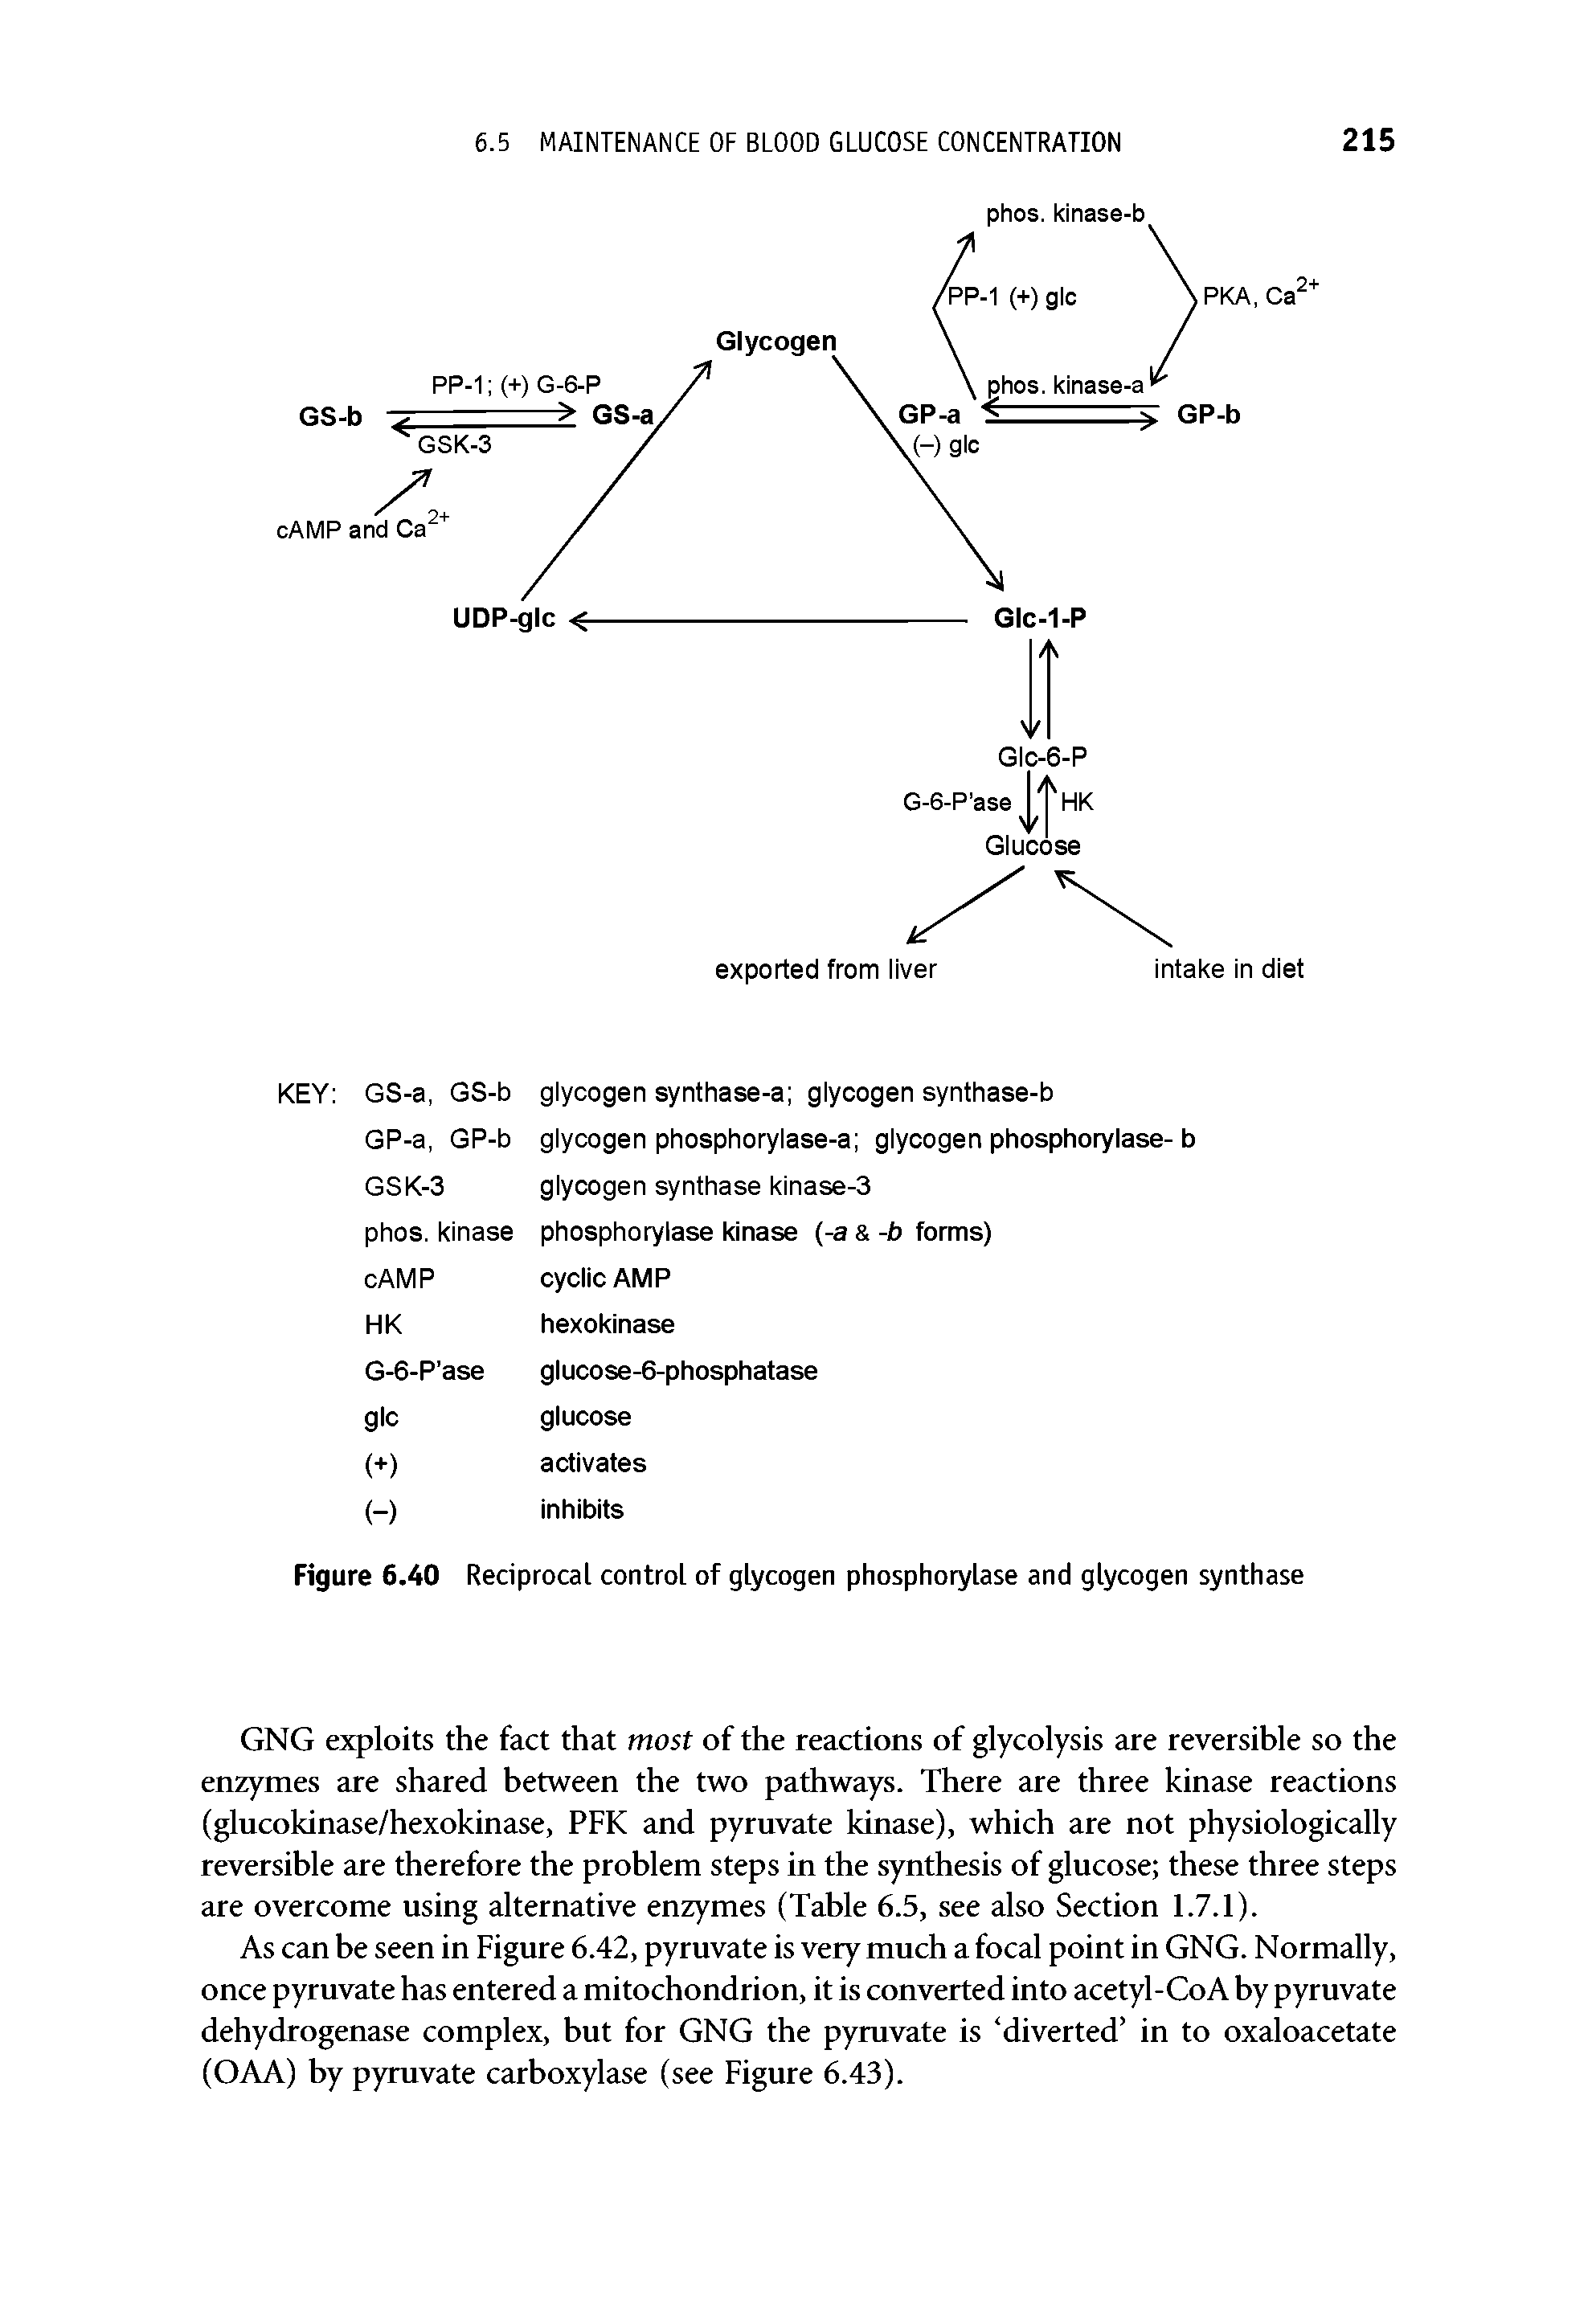 Figure 6.40 Reciprocal control of glycogen phosphorylase and glycogen synthase...